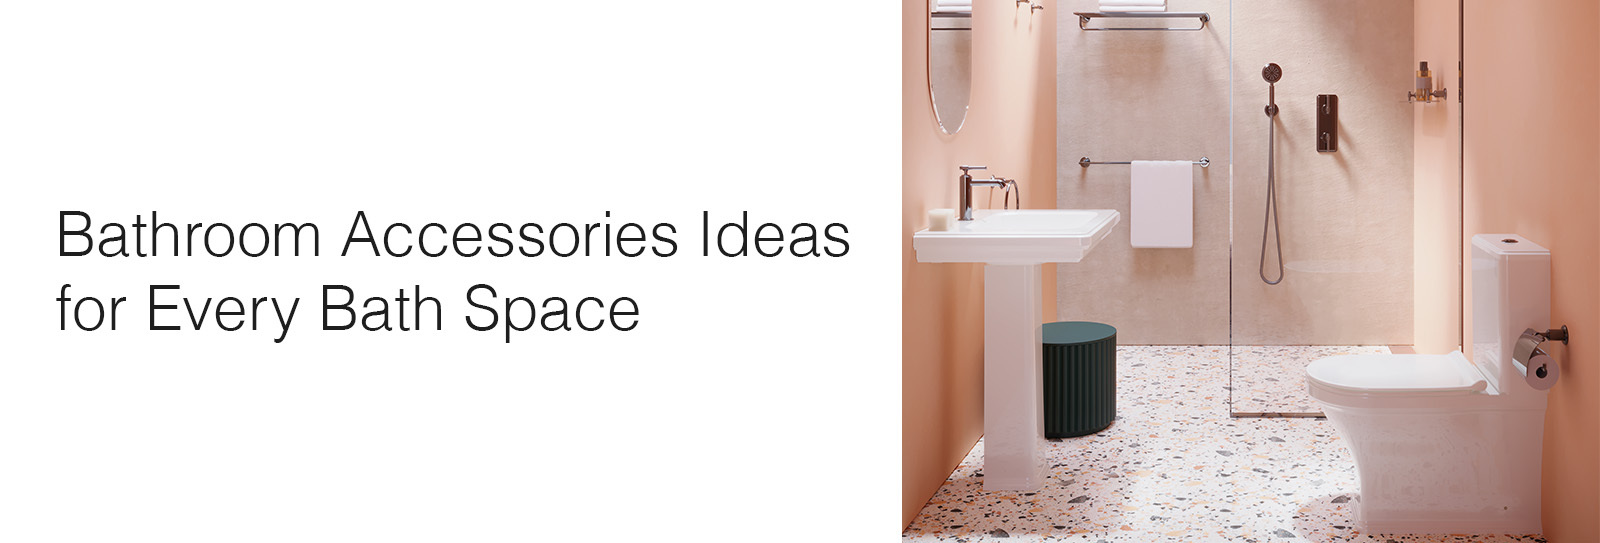 Bathroom Accessories Ideas